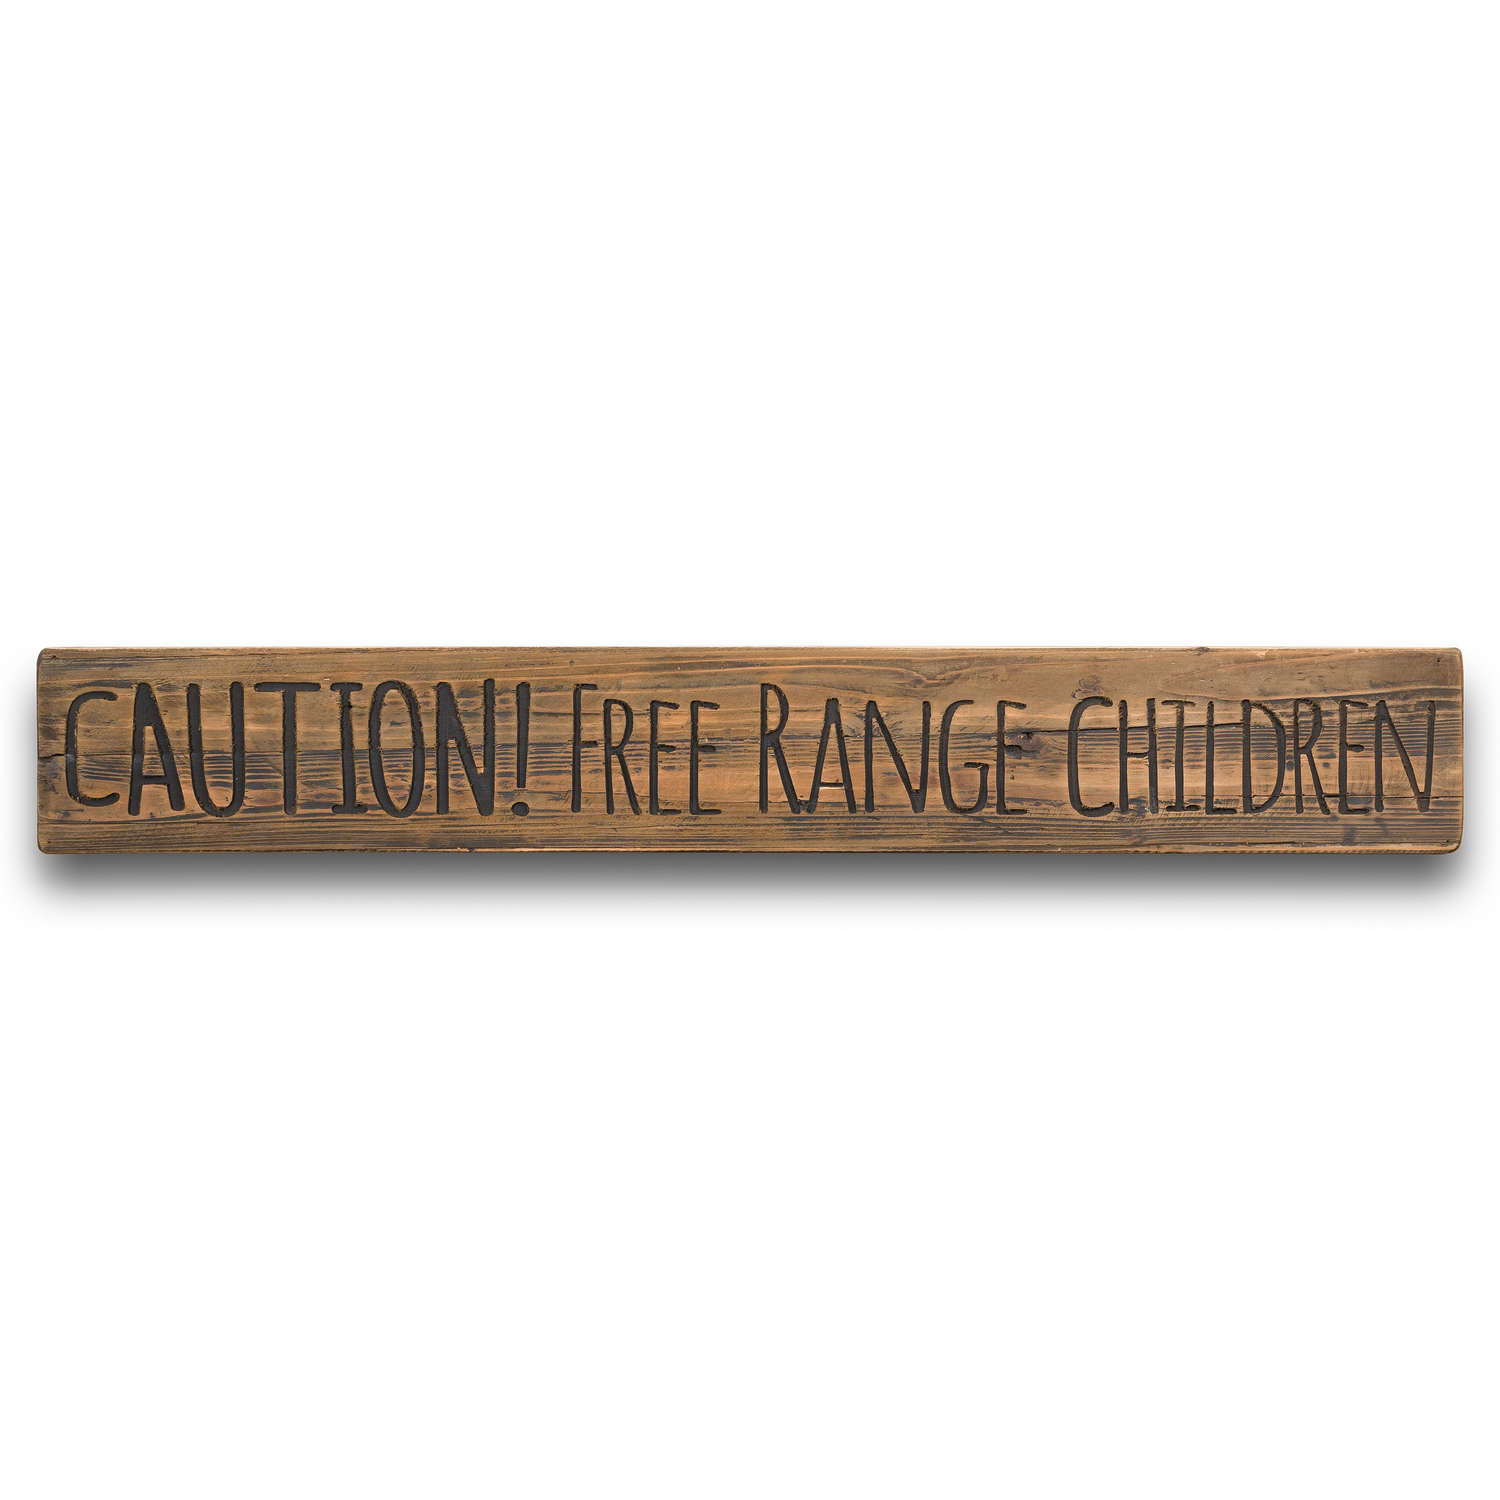 Free Range Children Rustic Wooden Message Plaque - Image 1